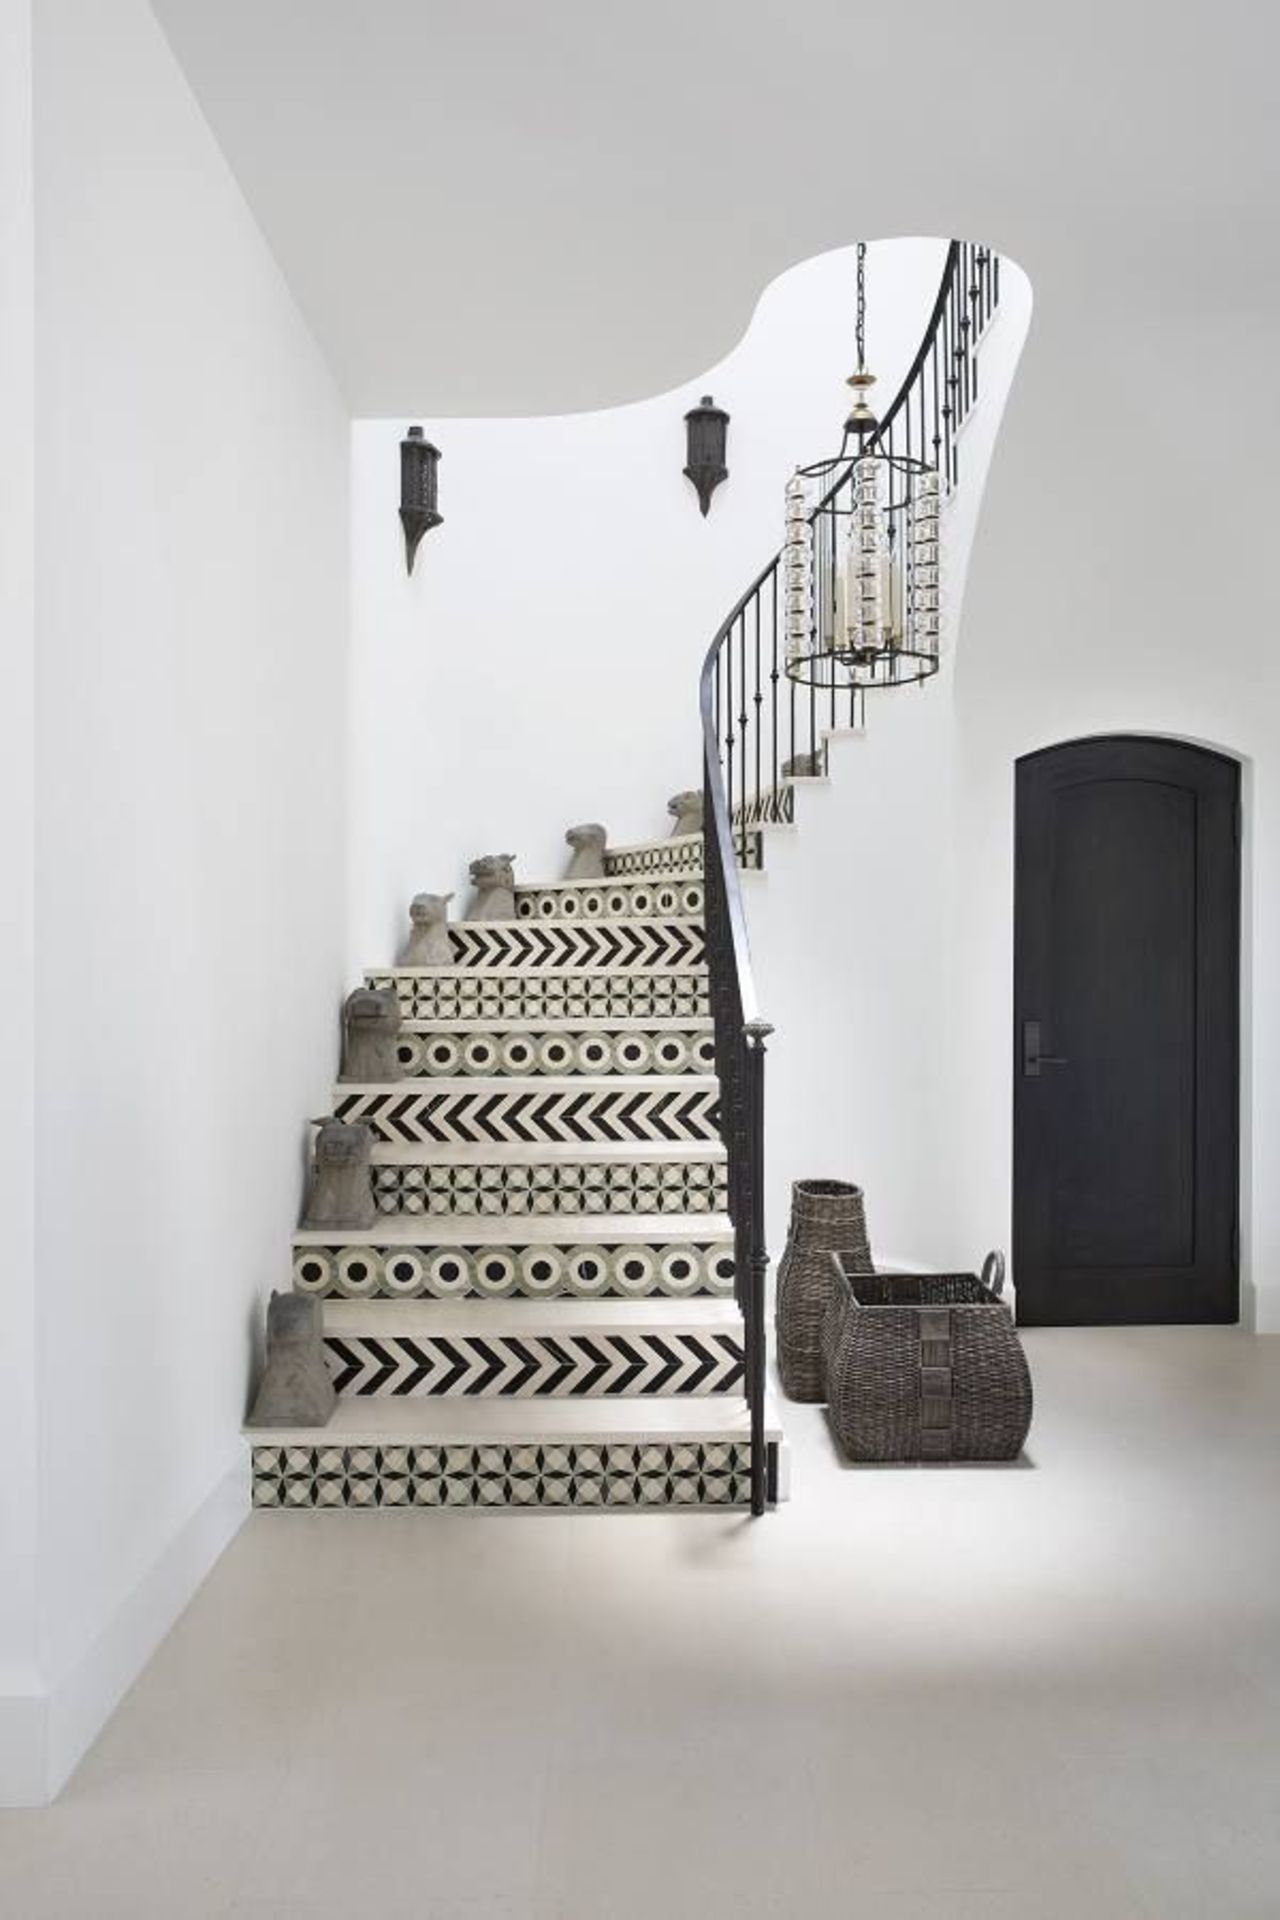 RT @InnovateBuild: Fun #staircase designs in 2016 - http://bit.ly/2iM6r7u #homedesign https://t.co/d8oNmCW2vo